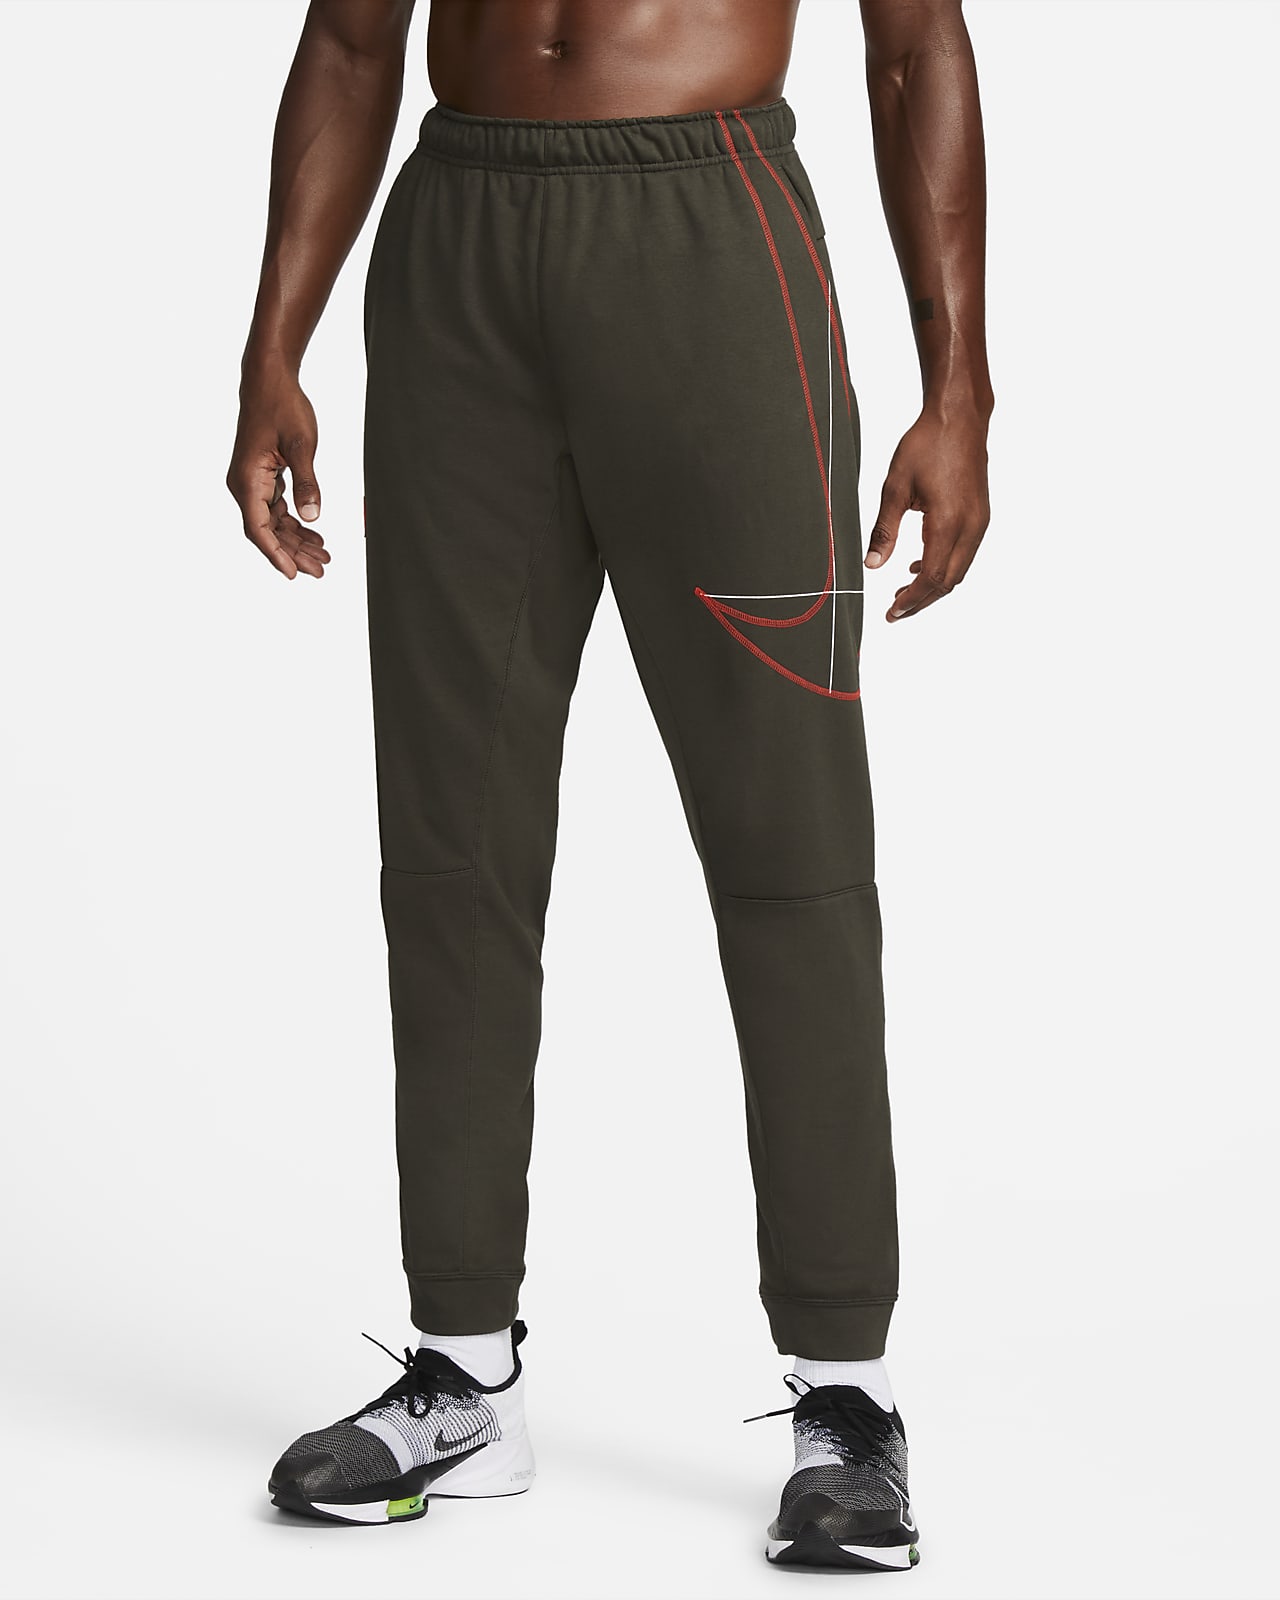 Pants de running entallados de tejido Fleece para hombre Nike Dri-FIT